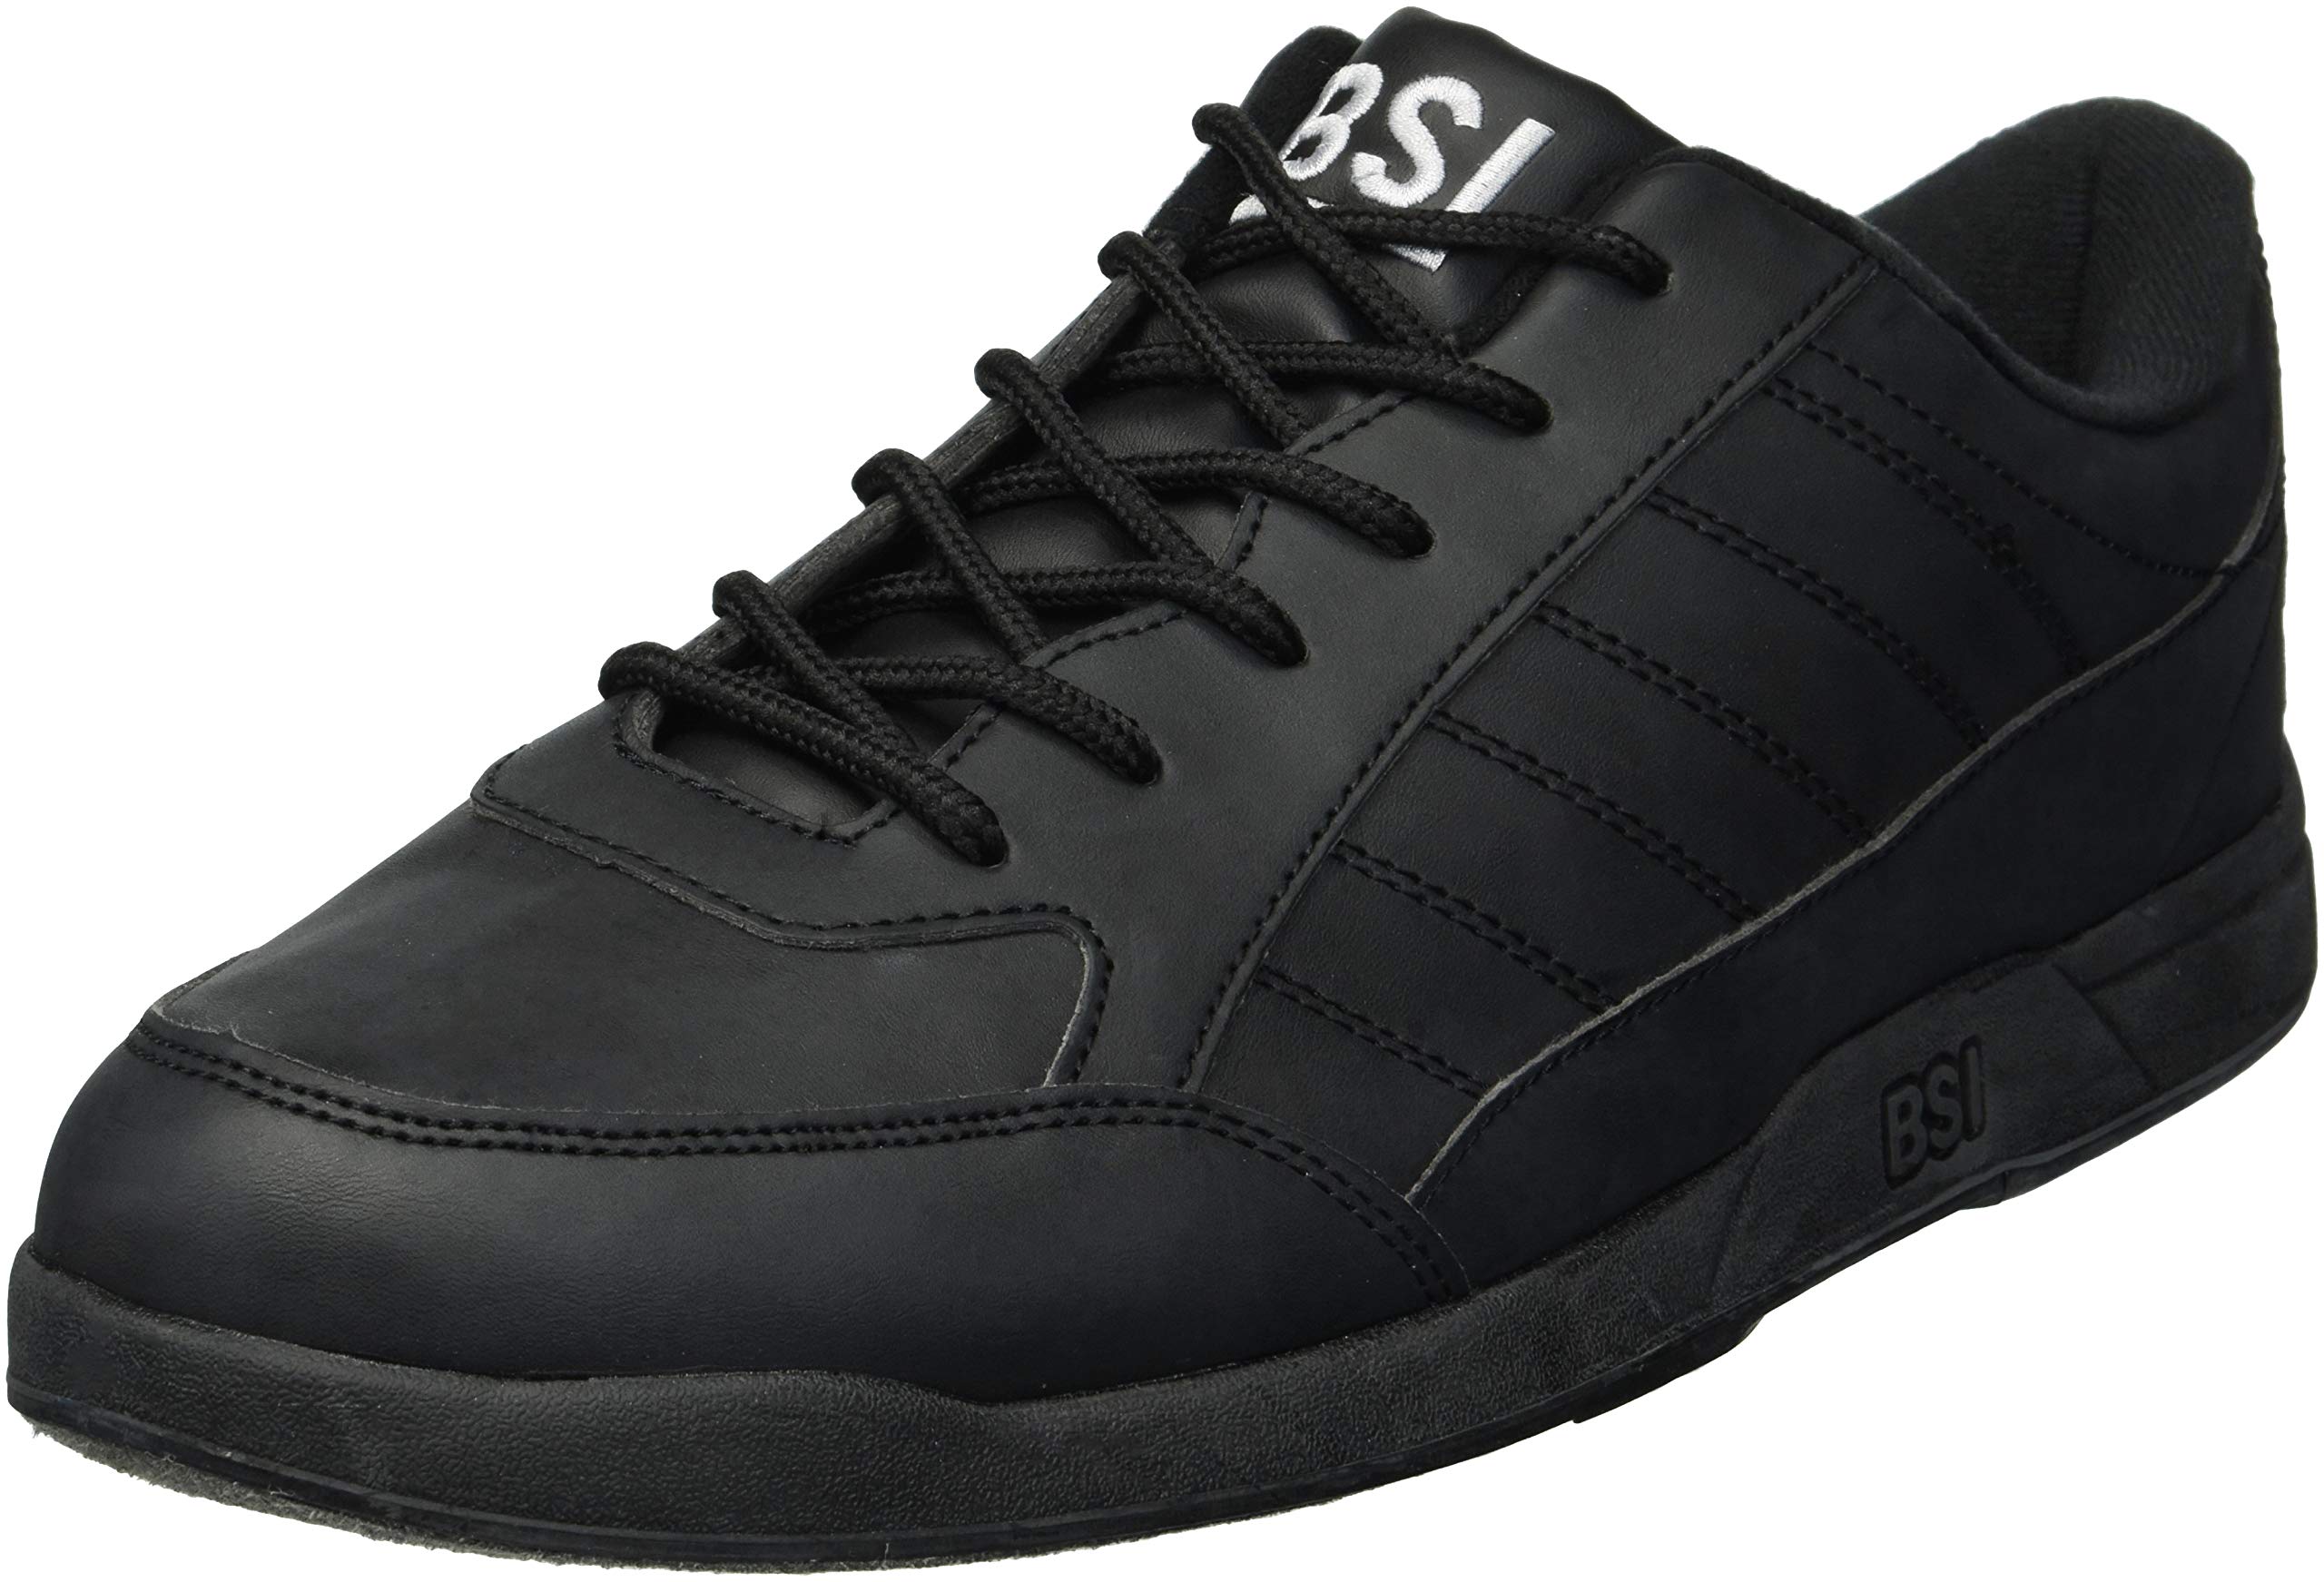 BSI Men's Basic #521 Bowling Shoes 10.5 Black